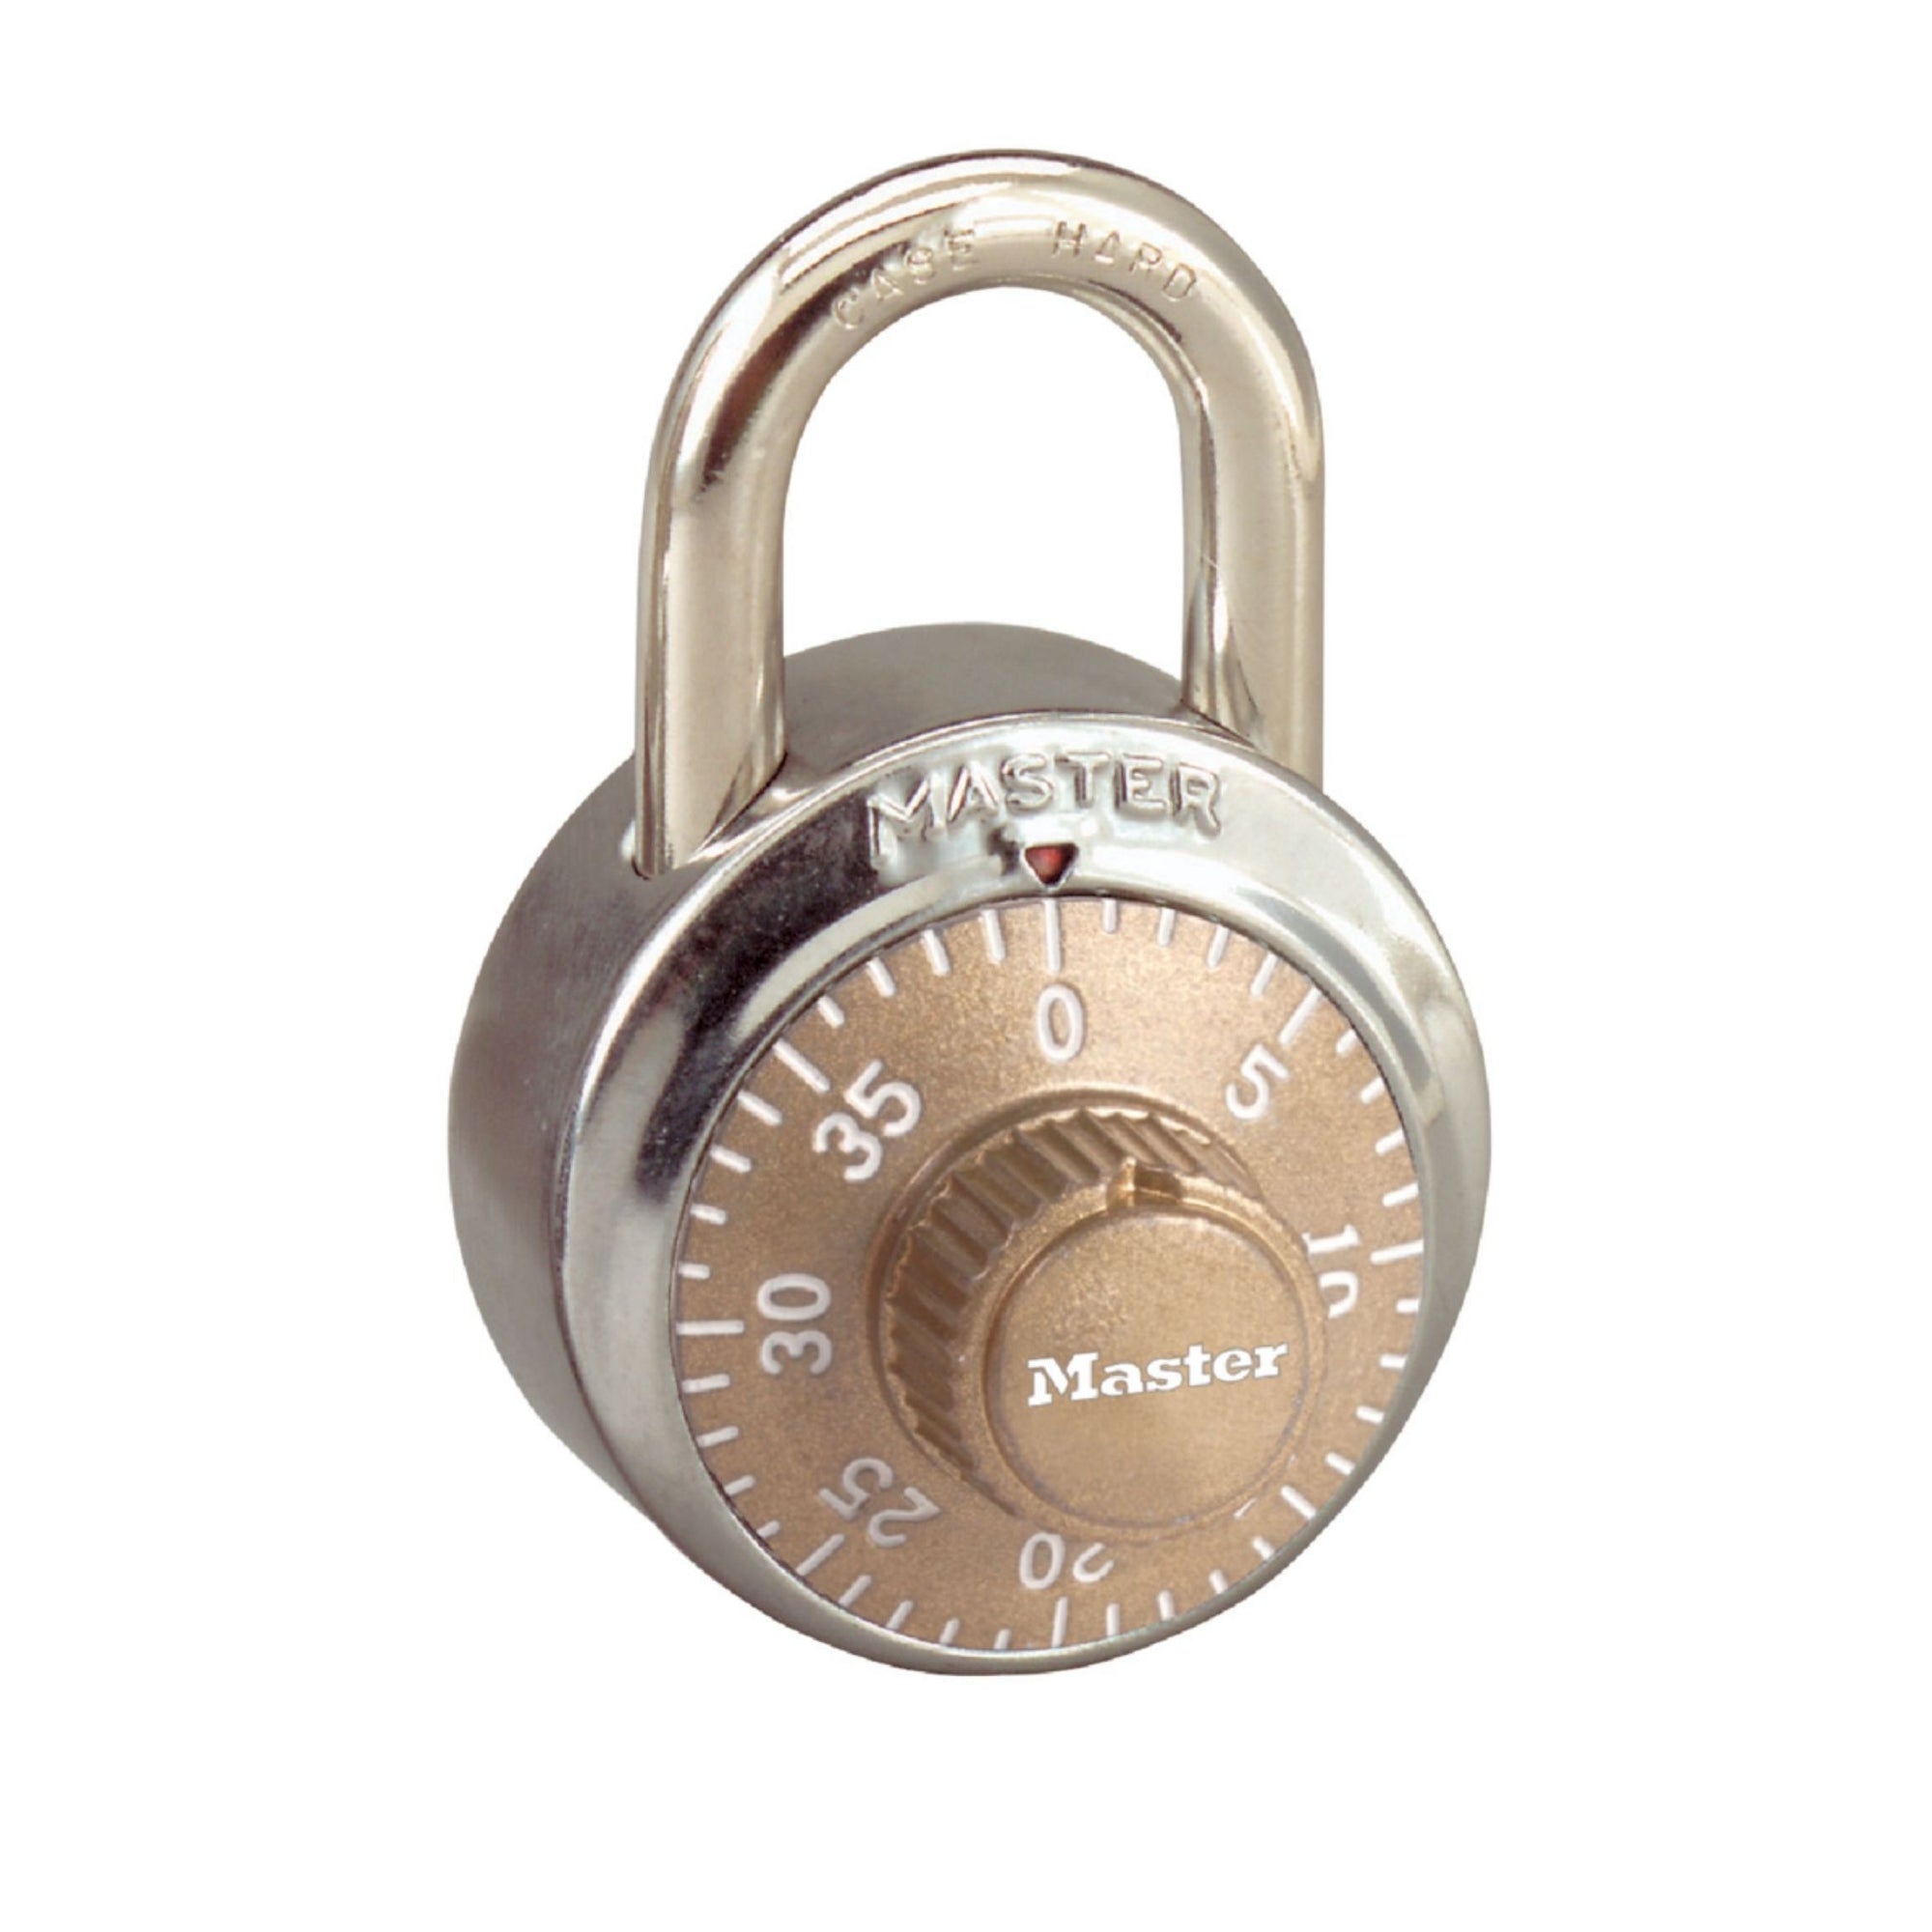 Master Lock 3KALF Outdoor Padlock with Key, 1 Pack,Silver - Combination  Padlocks 